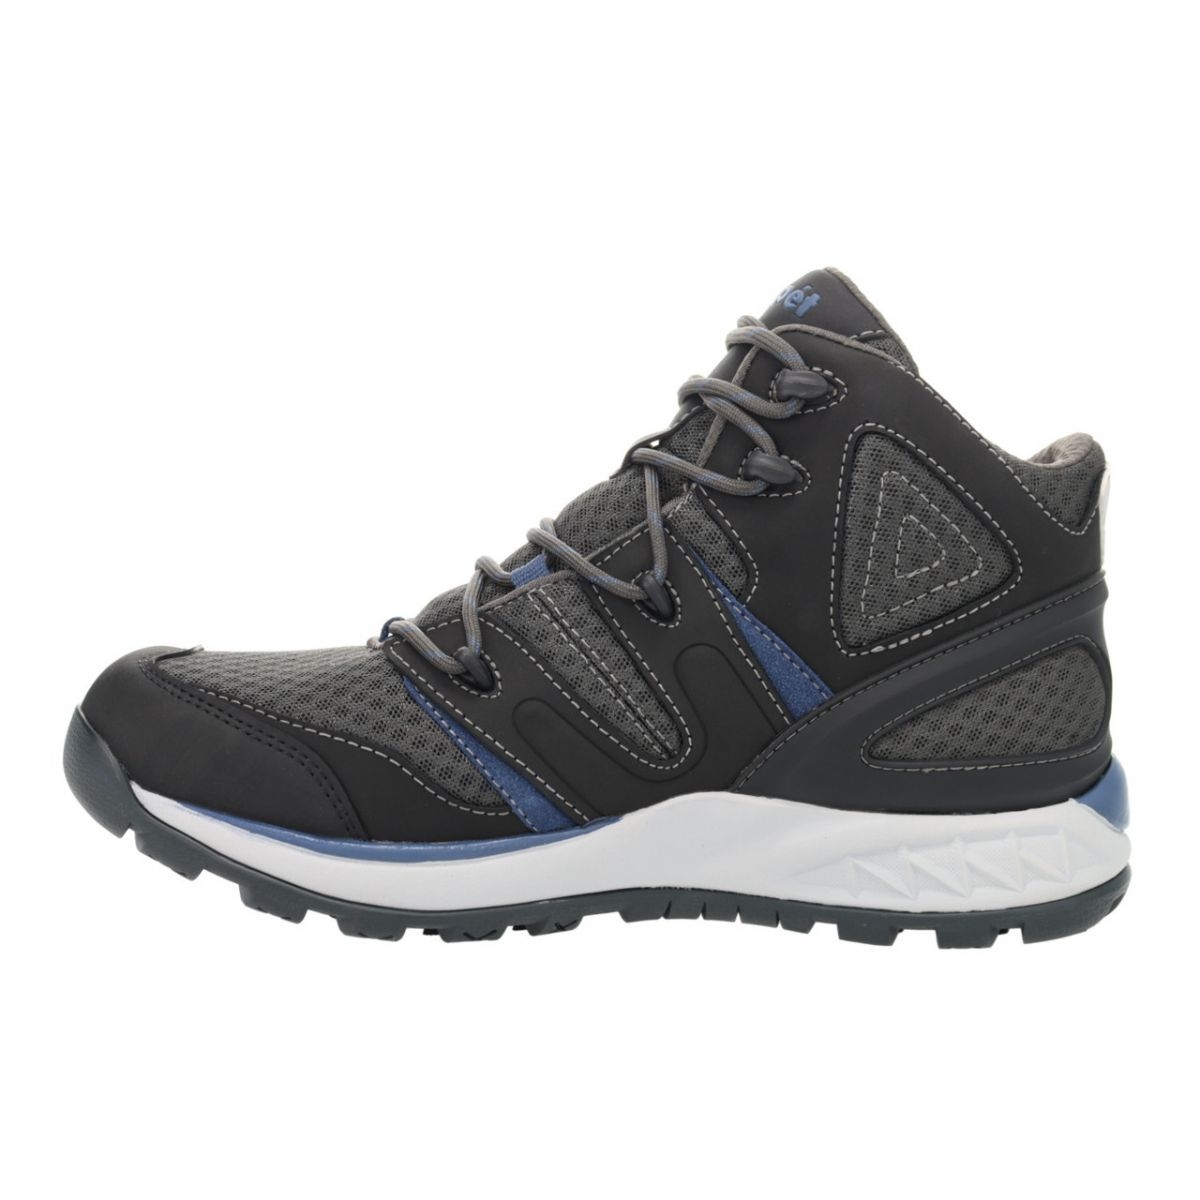 Propet Men's Veymont Waterproof Hiking Boot Grey/Blue - MOA022SGRB GREY/BLUE - GREY/BLUE, 8.5